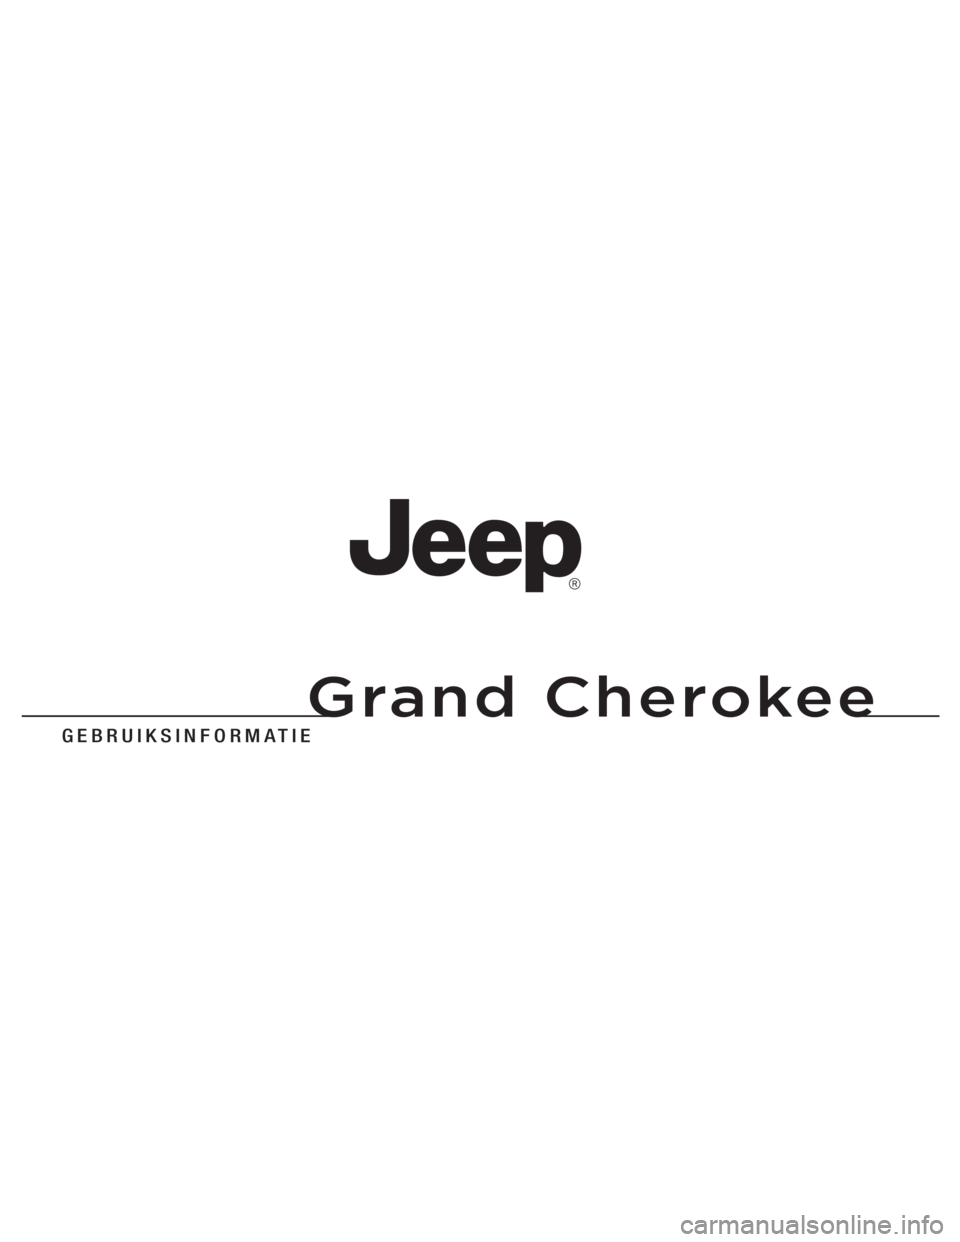 JEEP GRAND CHEROKEE 2013  Instructieboek (in Dutch) 
Grand Cherokee
G E B R U I K S I N \f O R M A \b I E
G r a n d   C h e r o k e e
11WK741-126-DUT-AA
                  \k        Gedruk\f in E\kur\bpa 11 